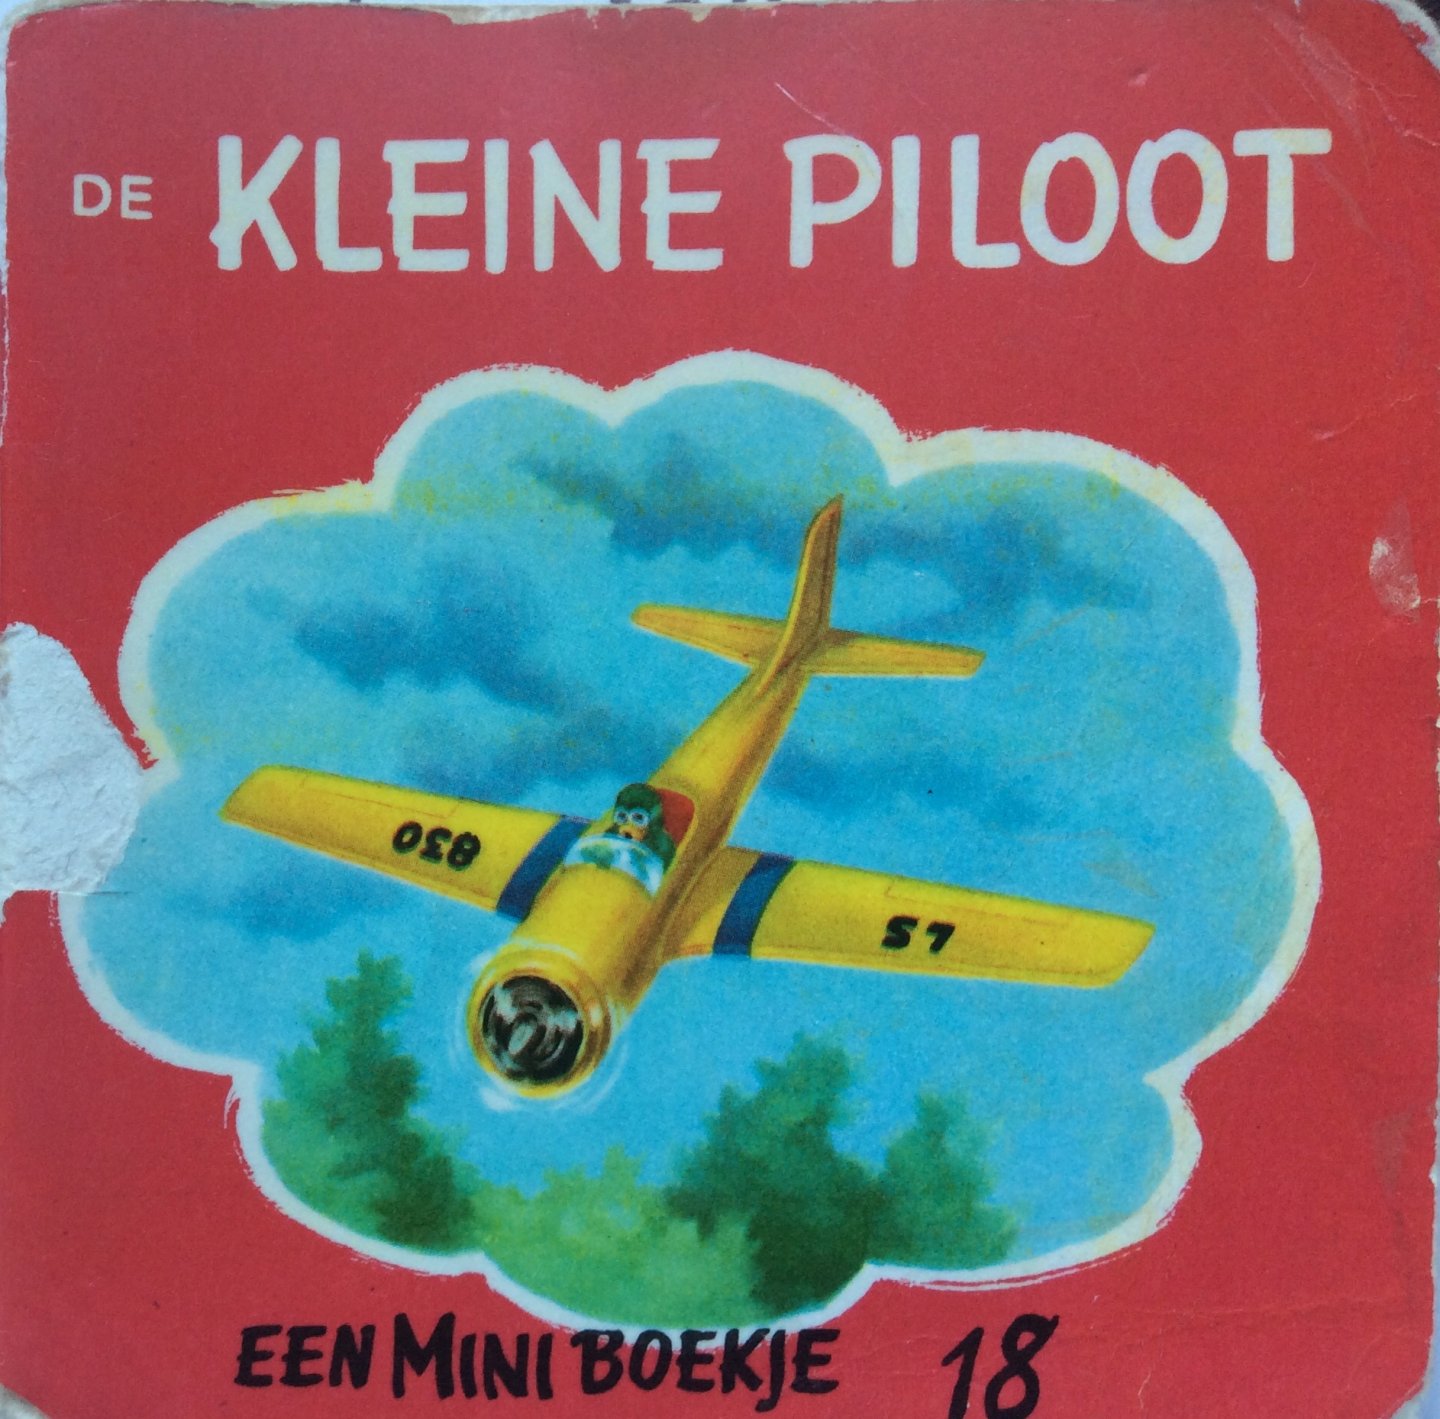 Knotter, Sonja - De kleine piloot